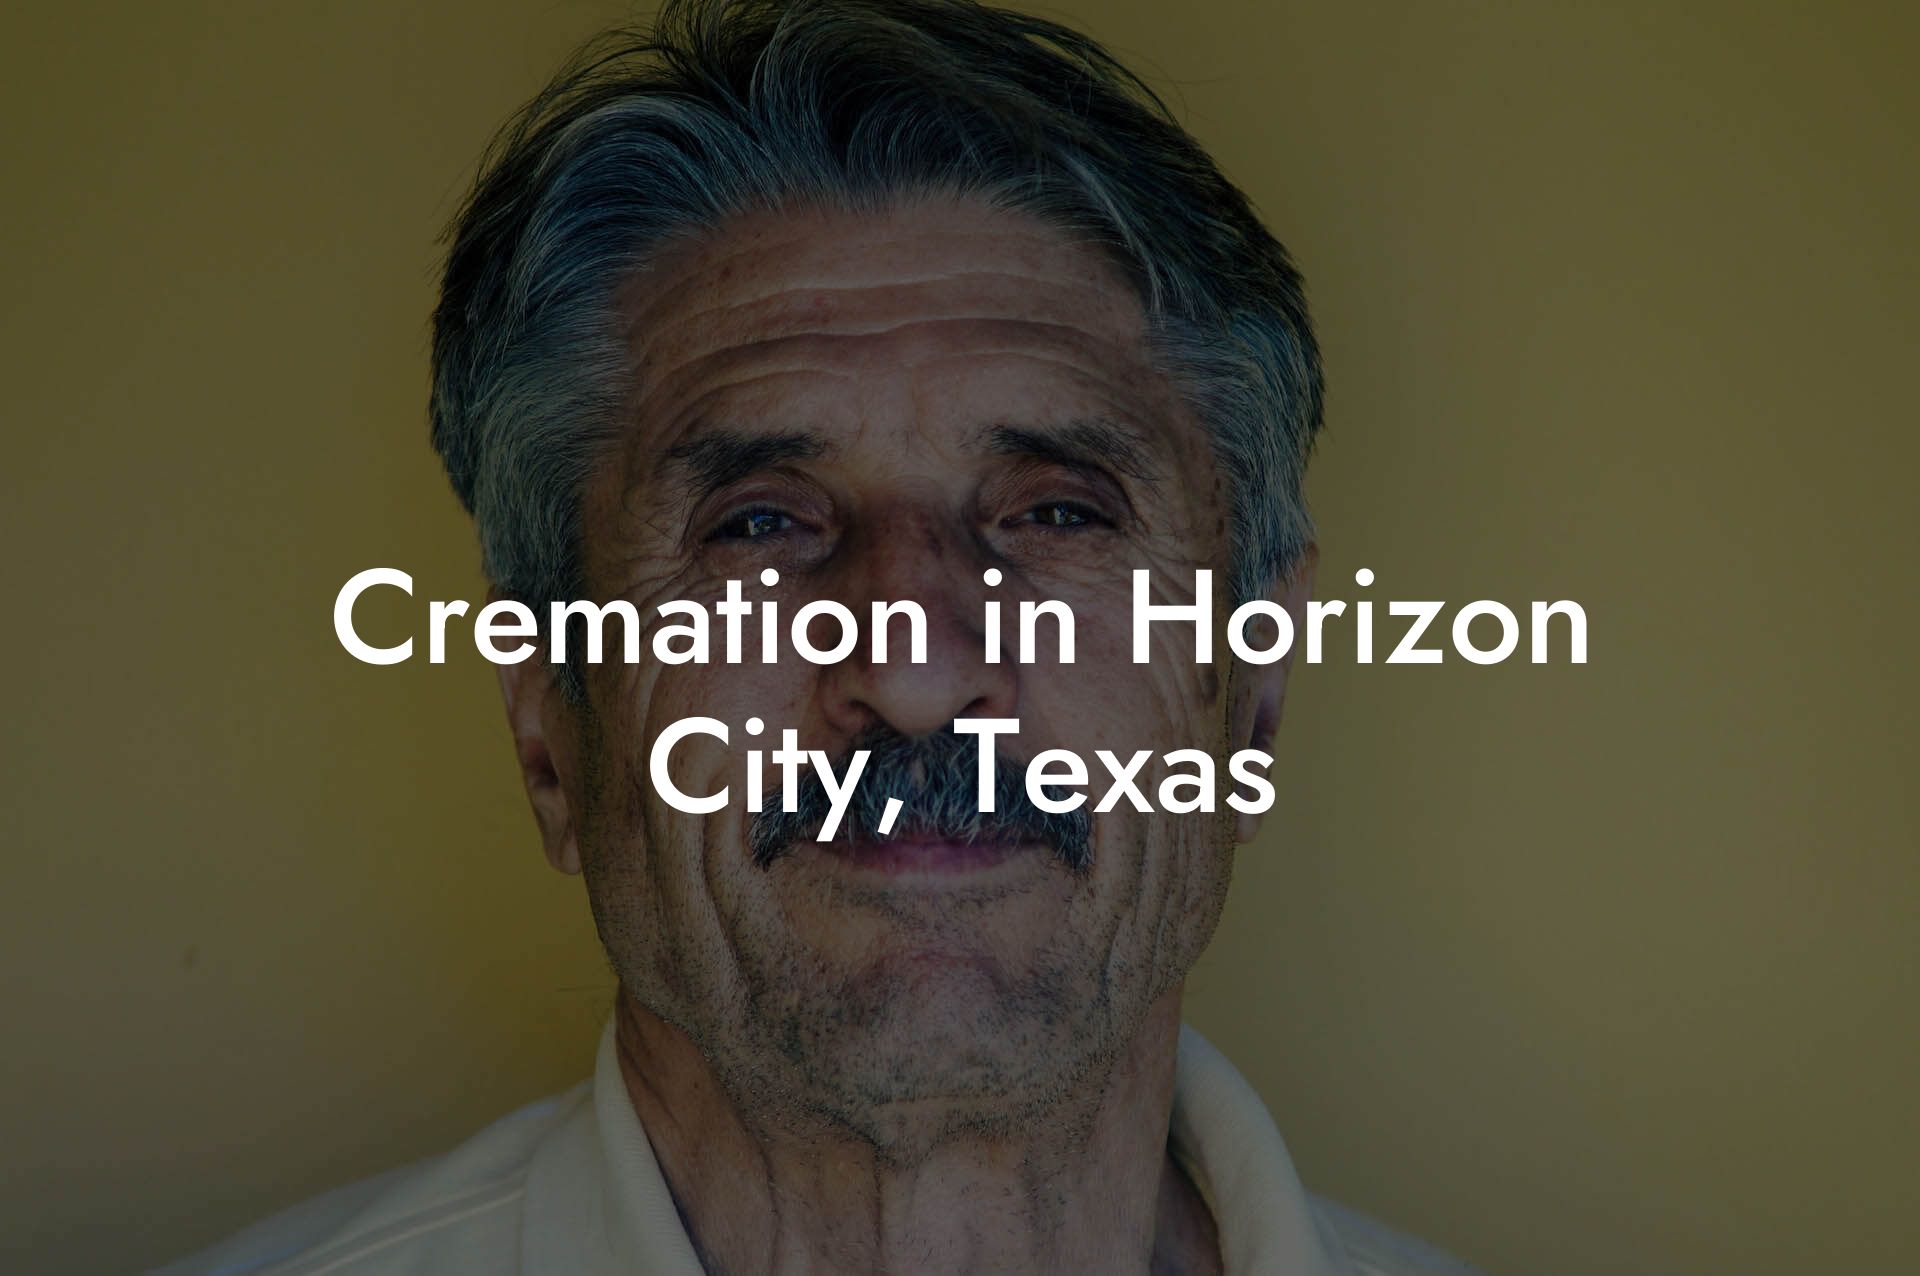 Cremation in Horizon City, Texas